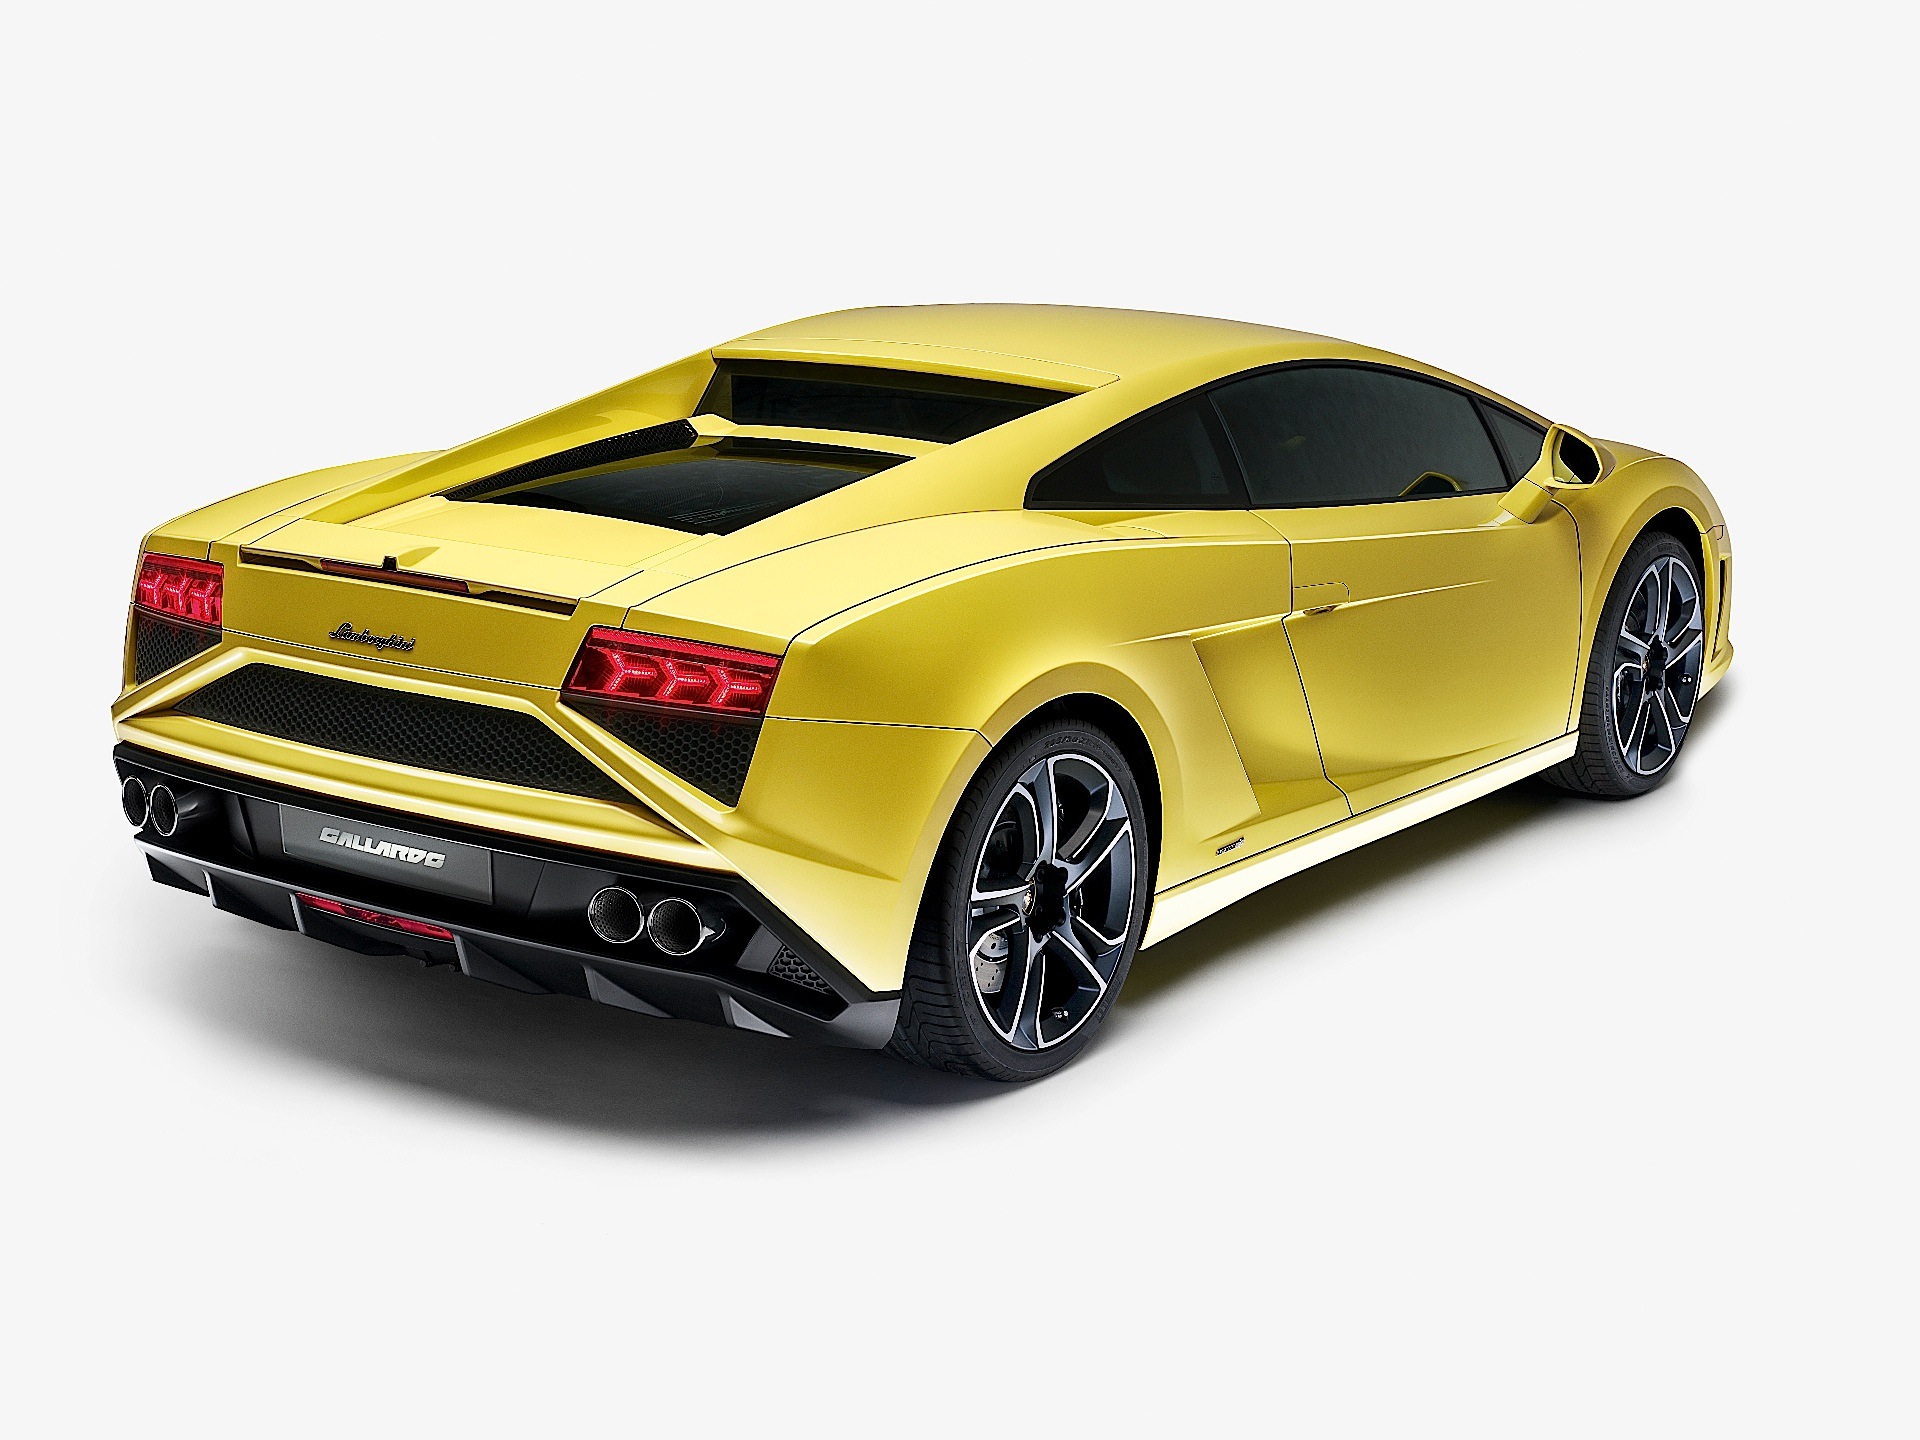 Lamborghini - Lamborghini Urus MD1 Is a "Mars Rover" Body Kit ... - The twelfth letter of the basic modern latin alphabet.